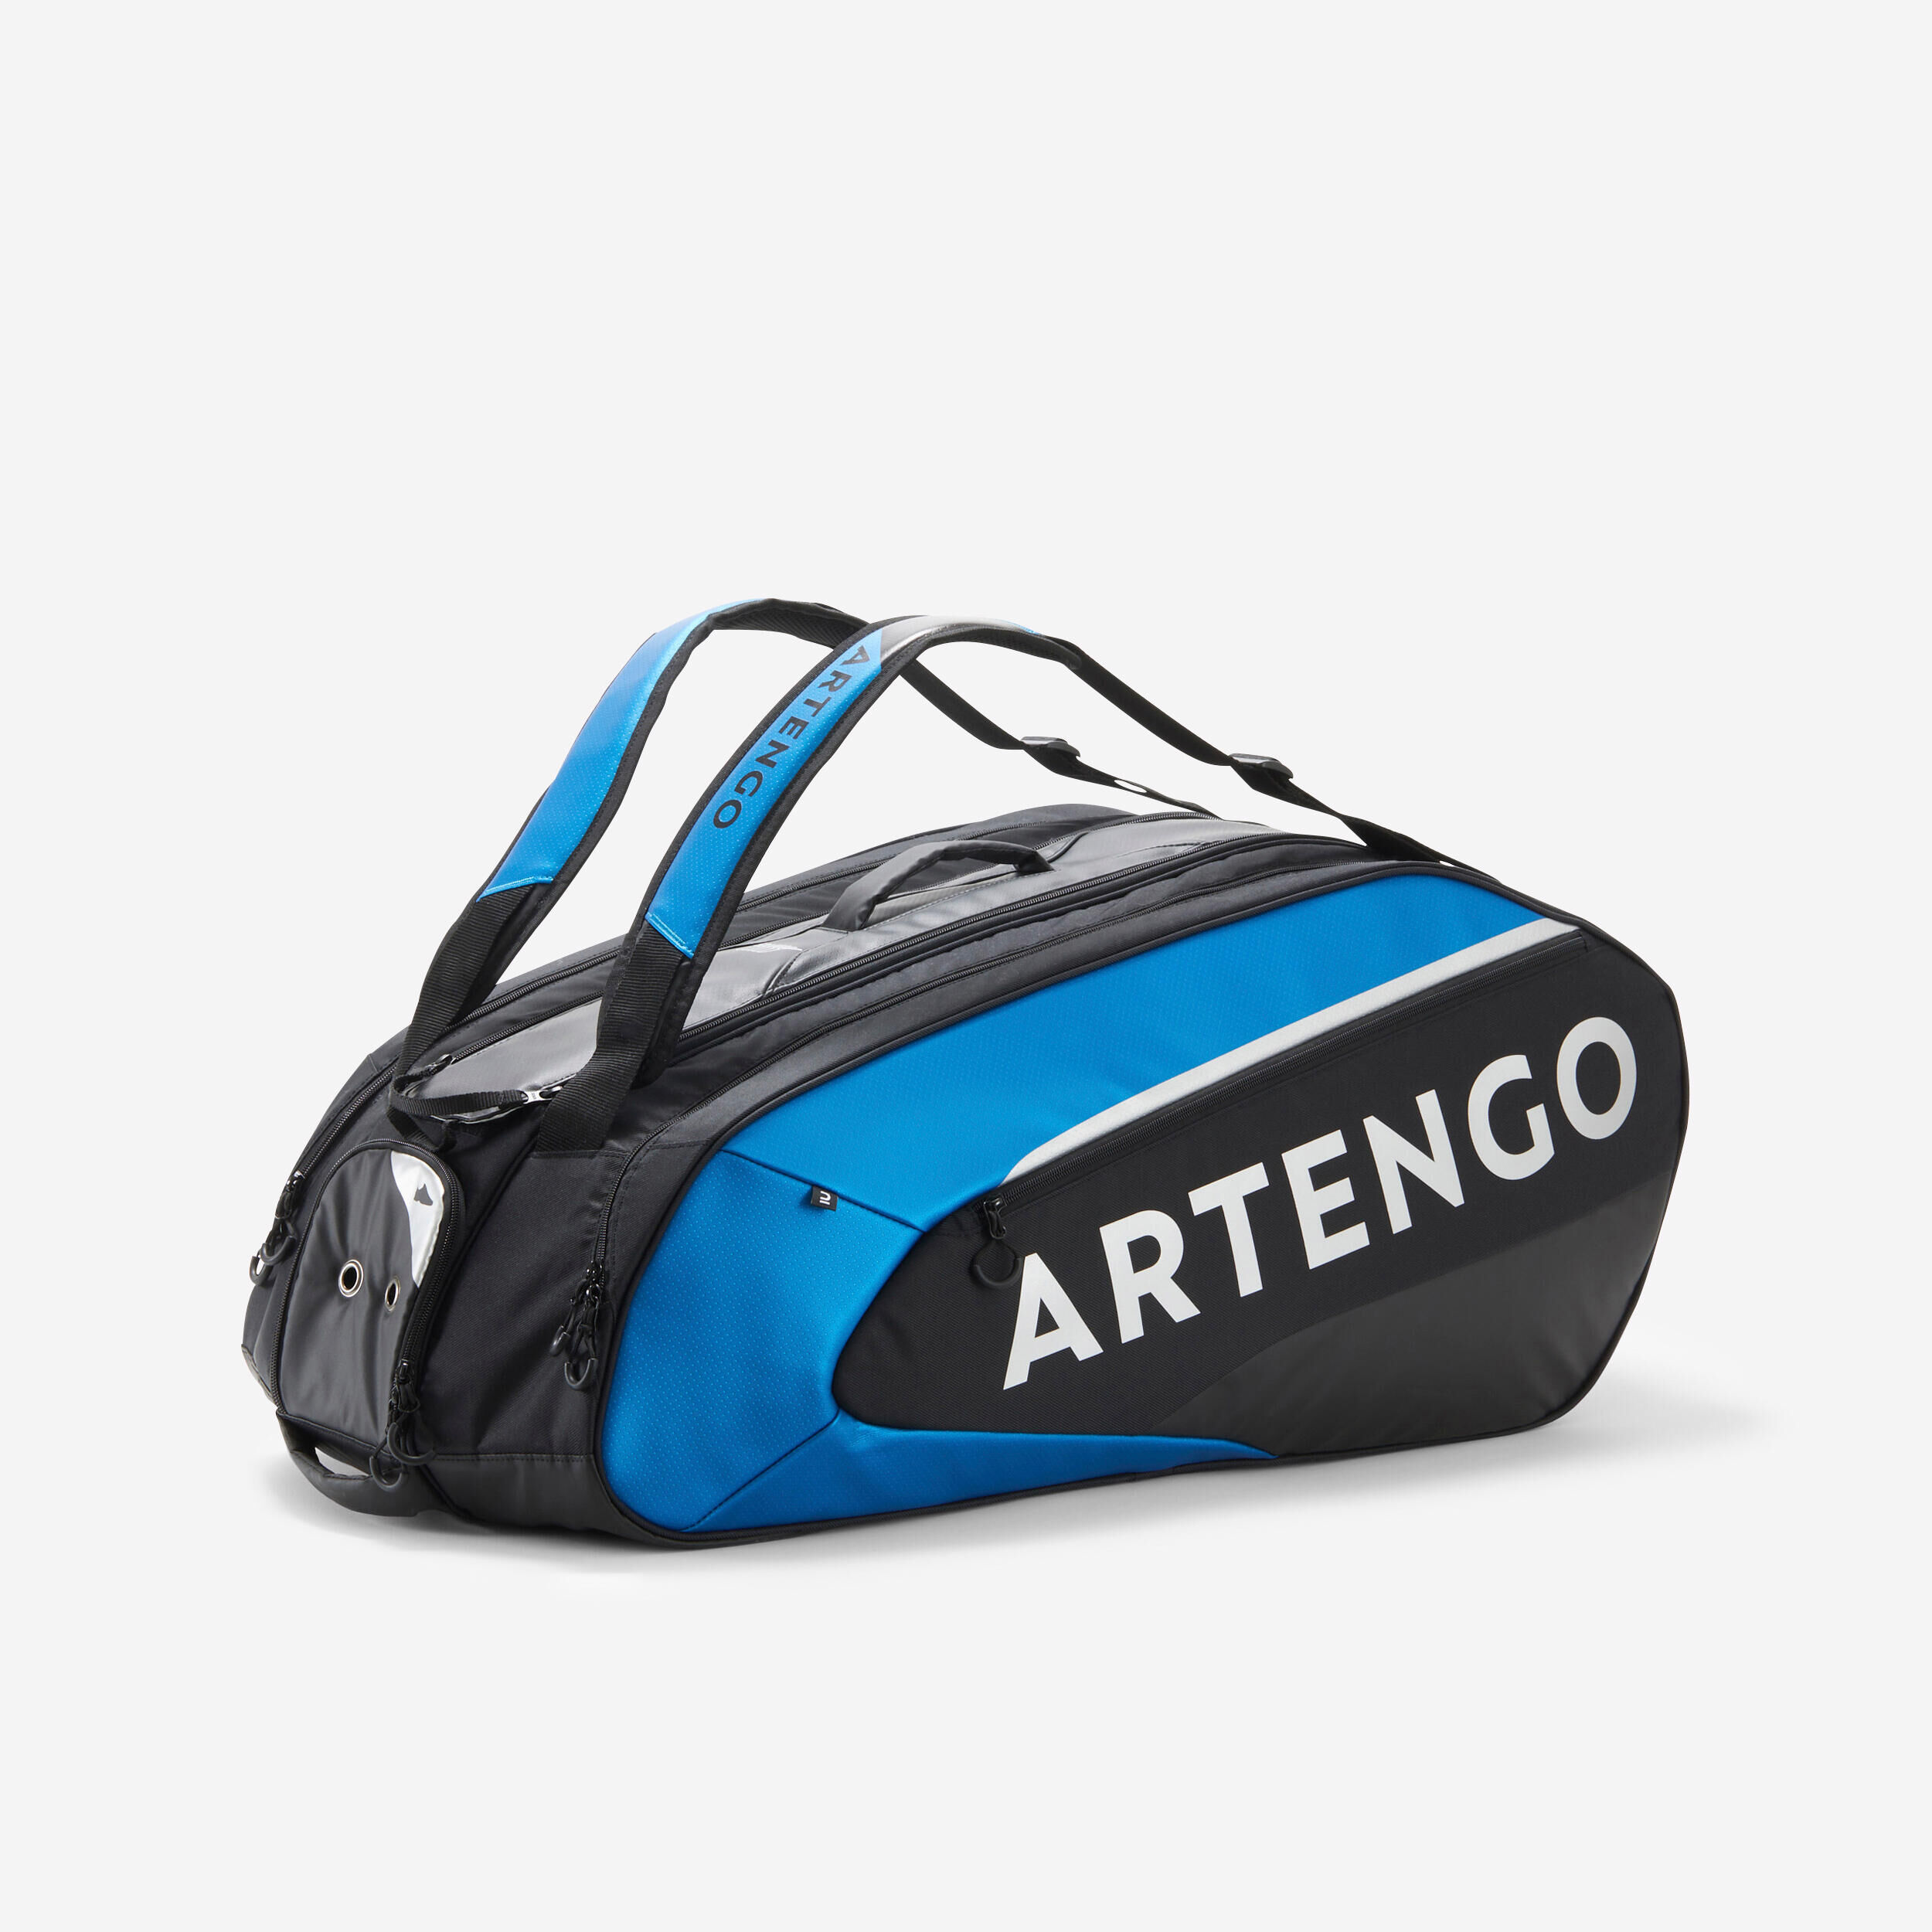 ARTENGO Insulated 12-Racket Tennis Bag XL Pro - Black/Blue Spin